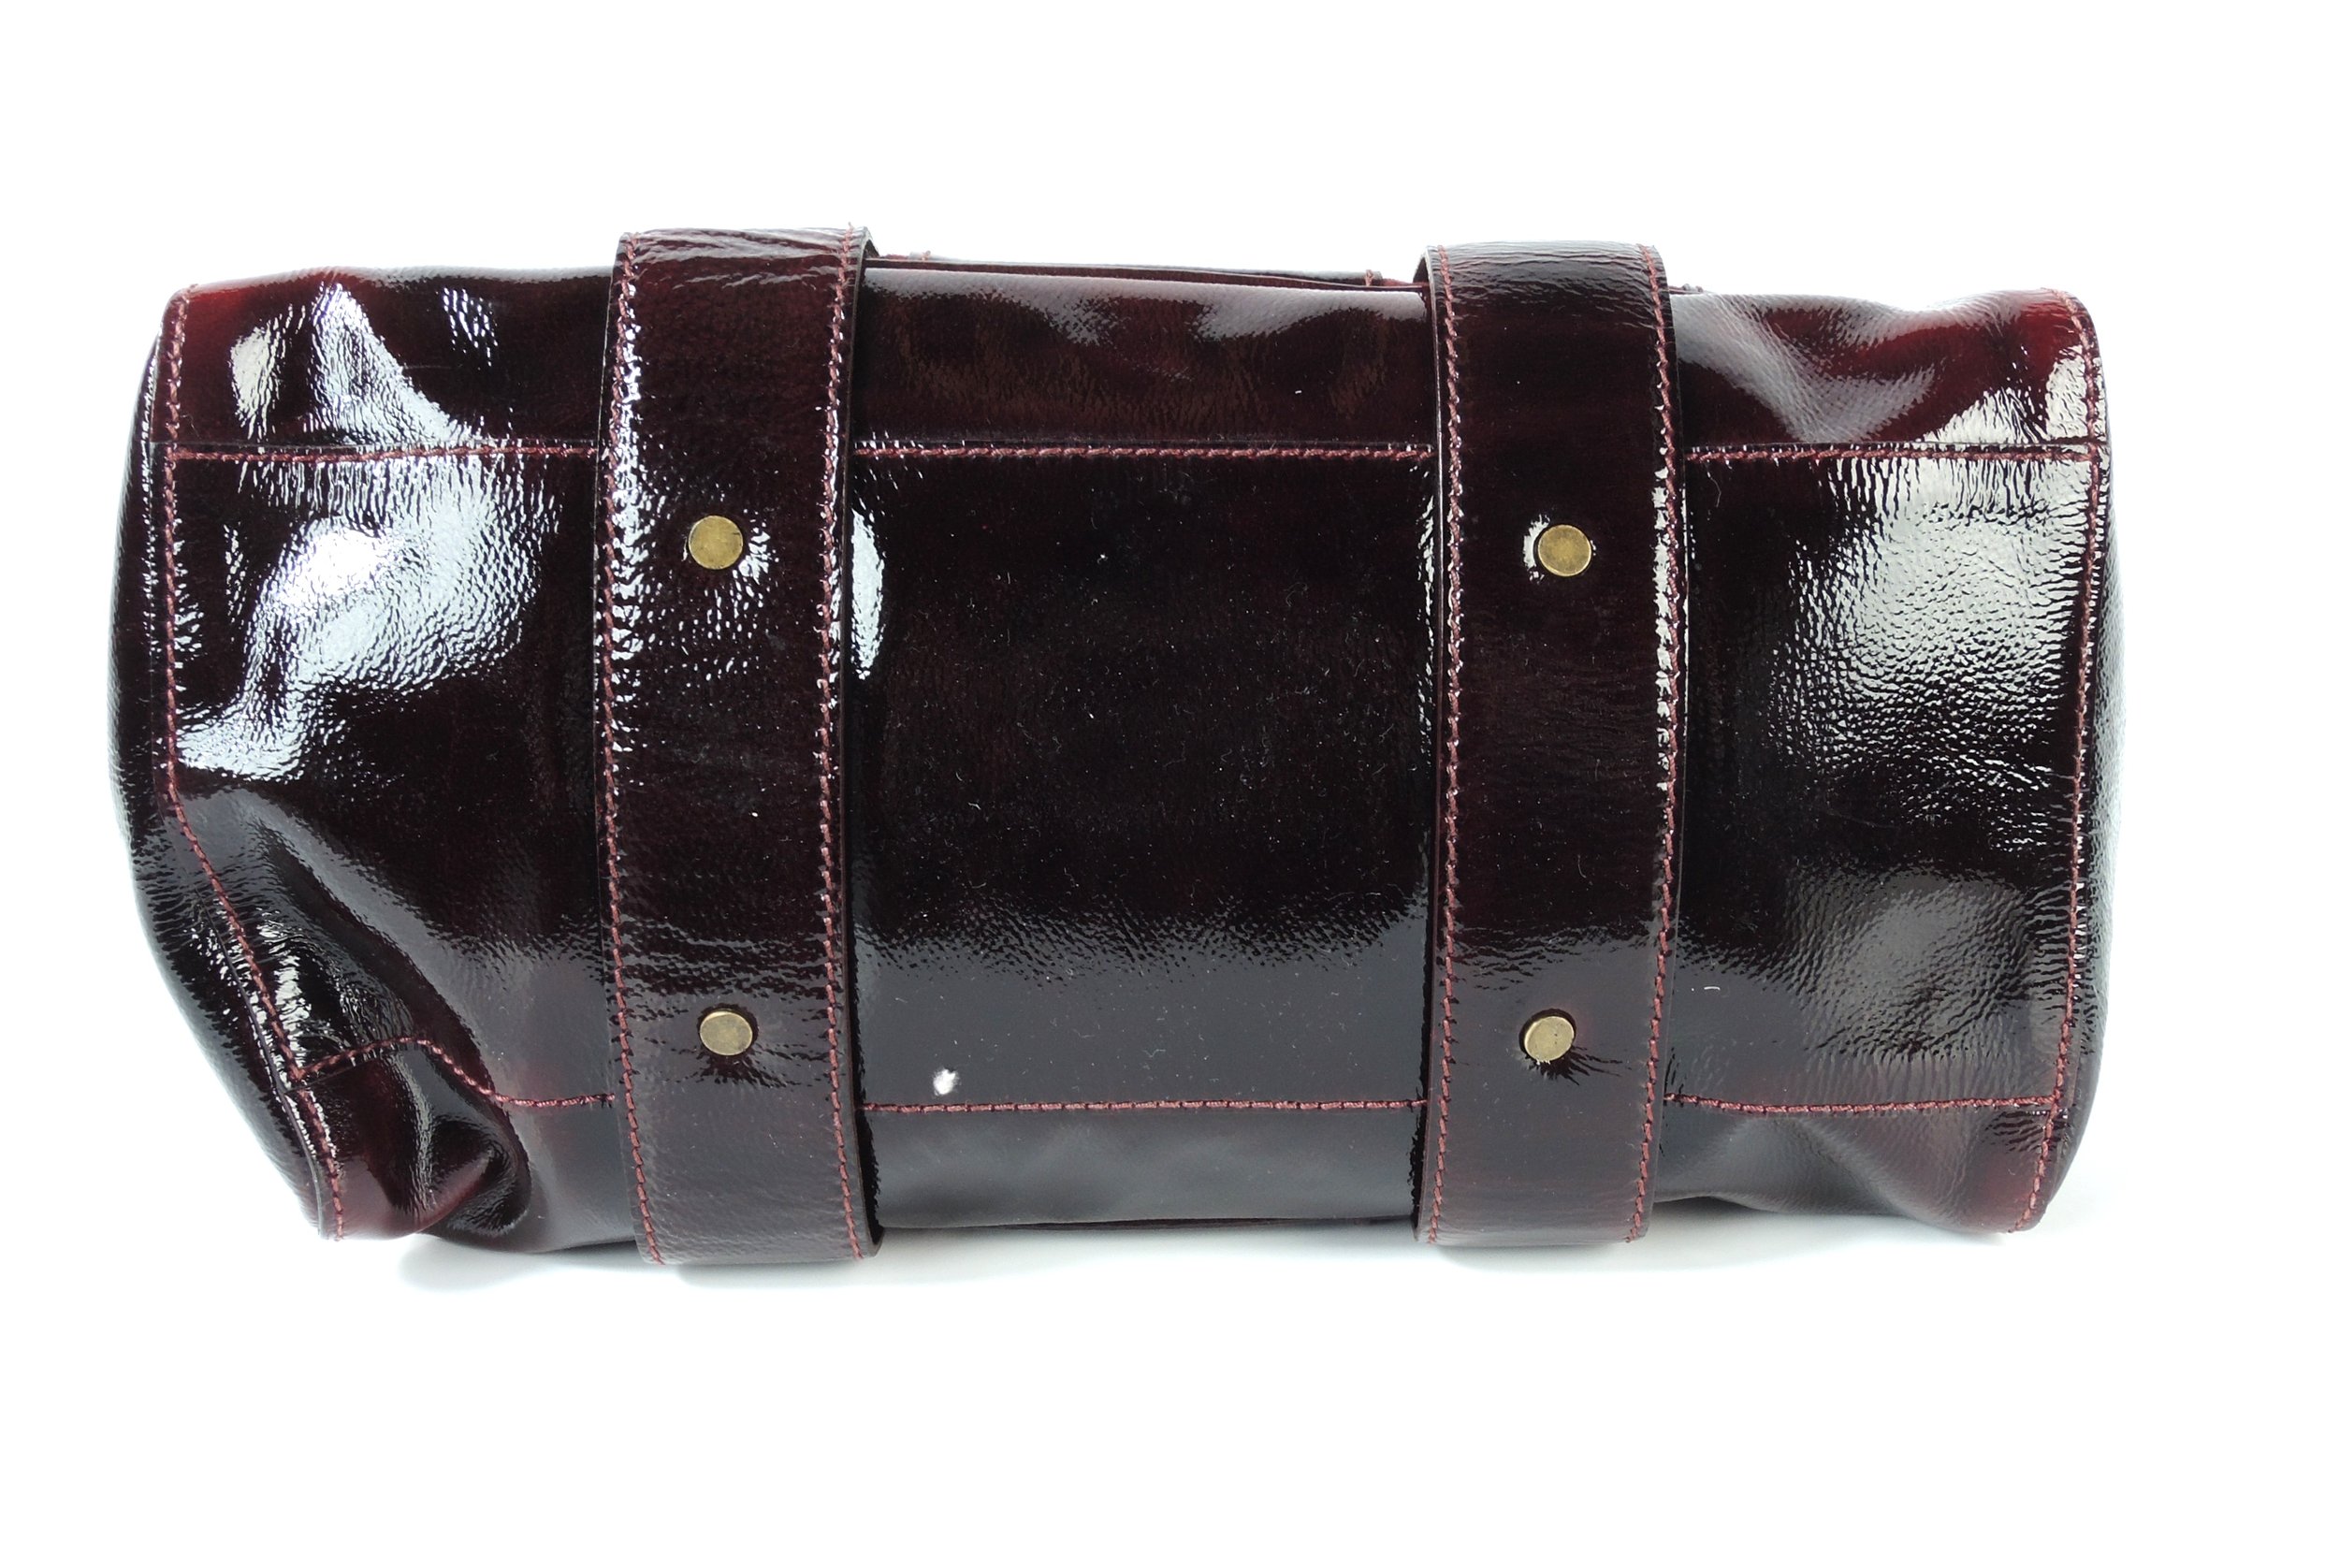 burgundy patent leather